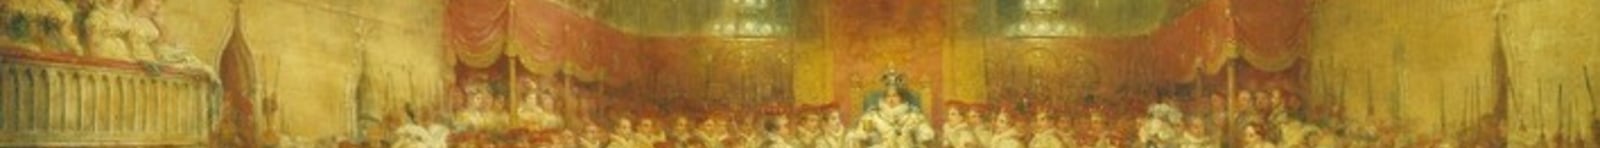 Coronation banquet of George IV.jpg